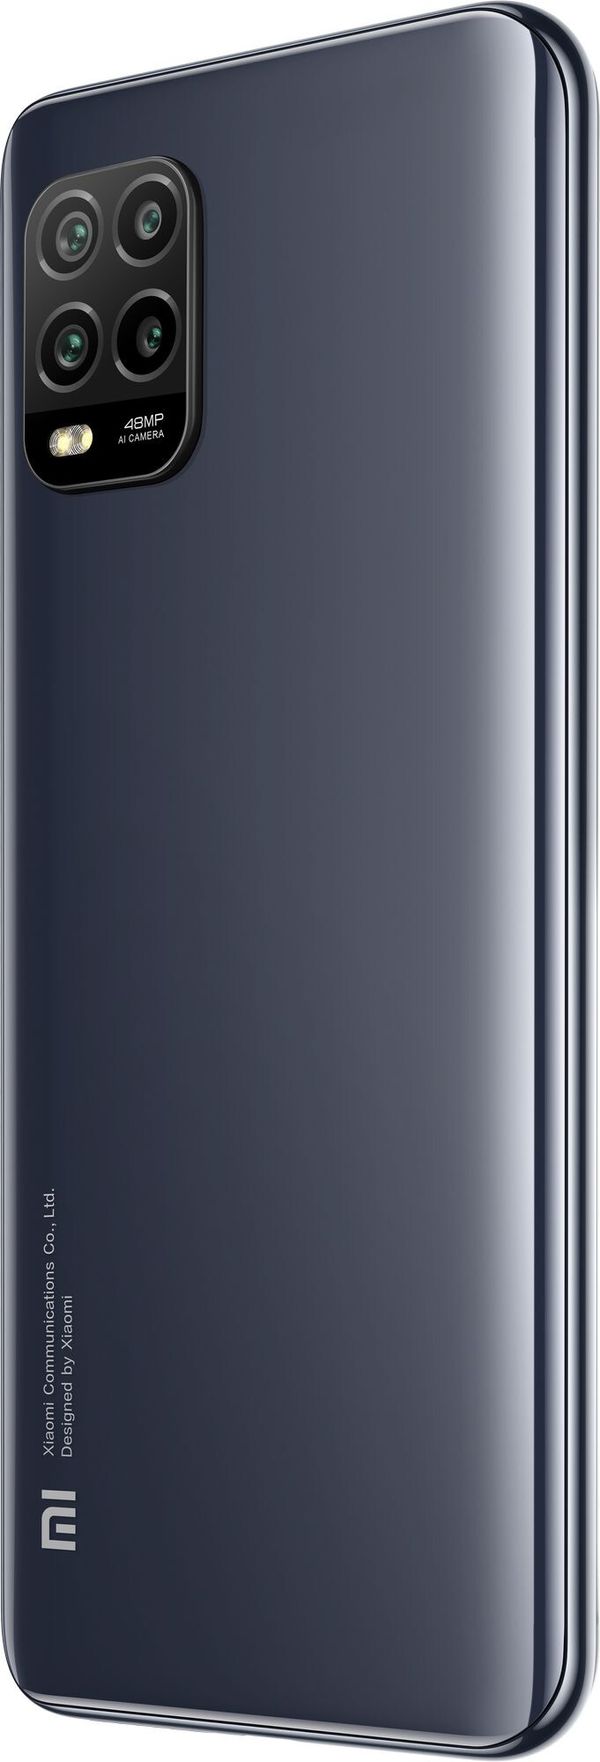 RE-95100J960021-PQ smartphone reacondicionado xiaomi mi 10 lite 5g cosmic grey 6gb ram 128gb rom grado a